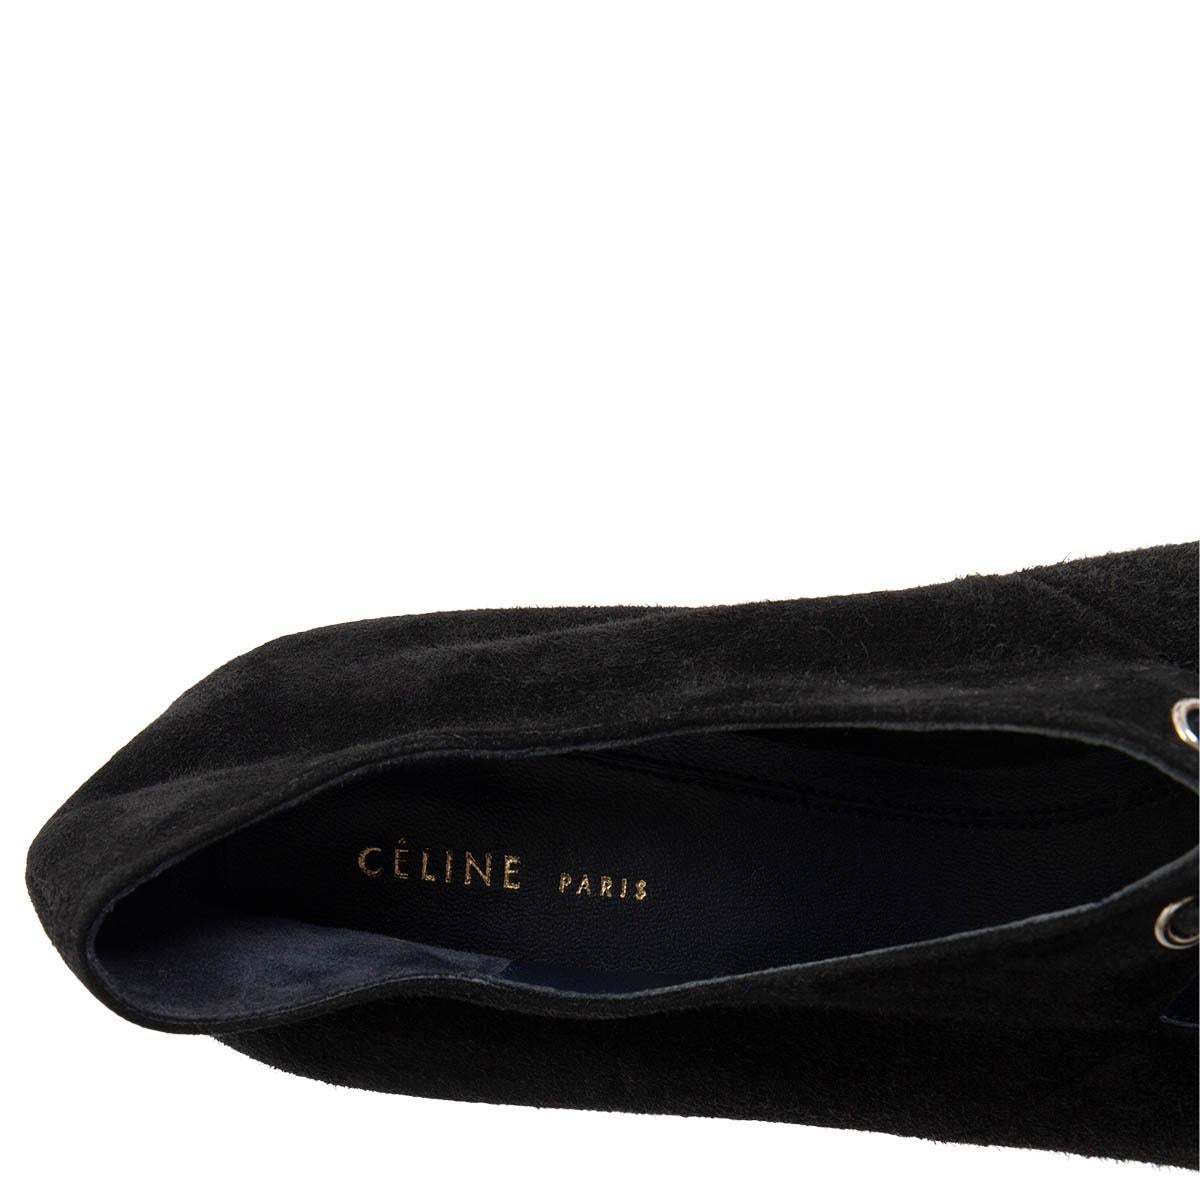 Black CELINE black suede KITTEN HEEL Pumps Shoes 37.5